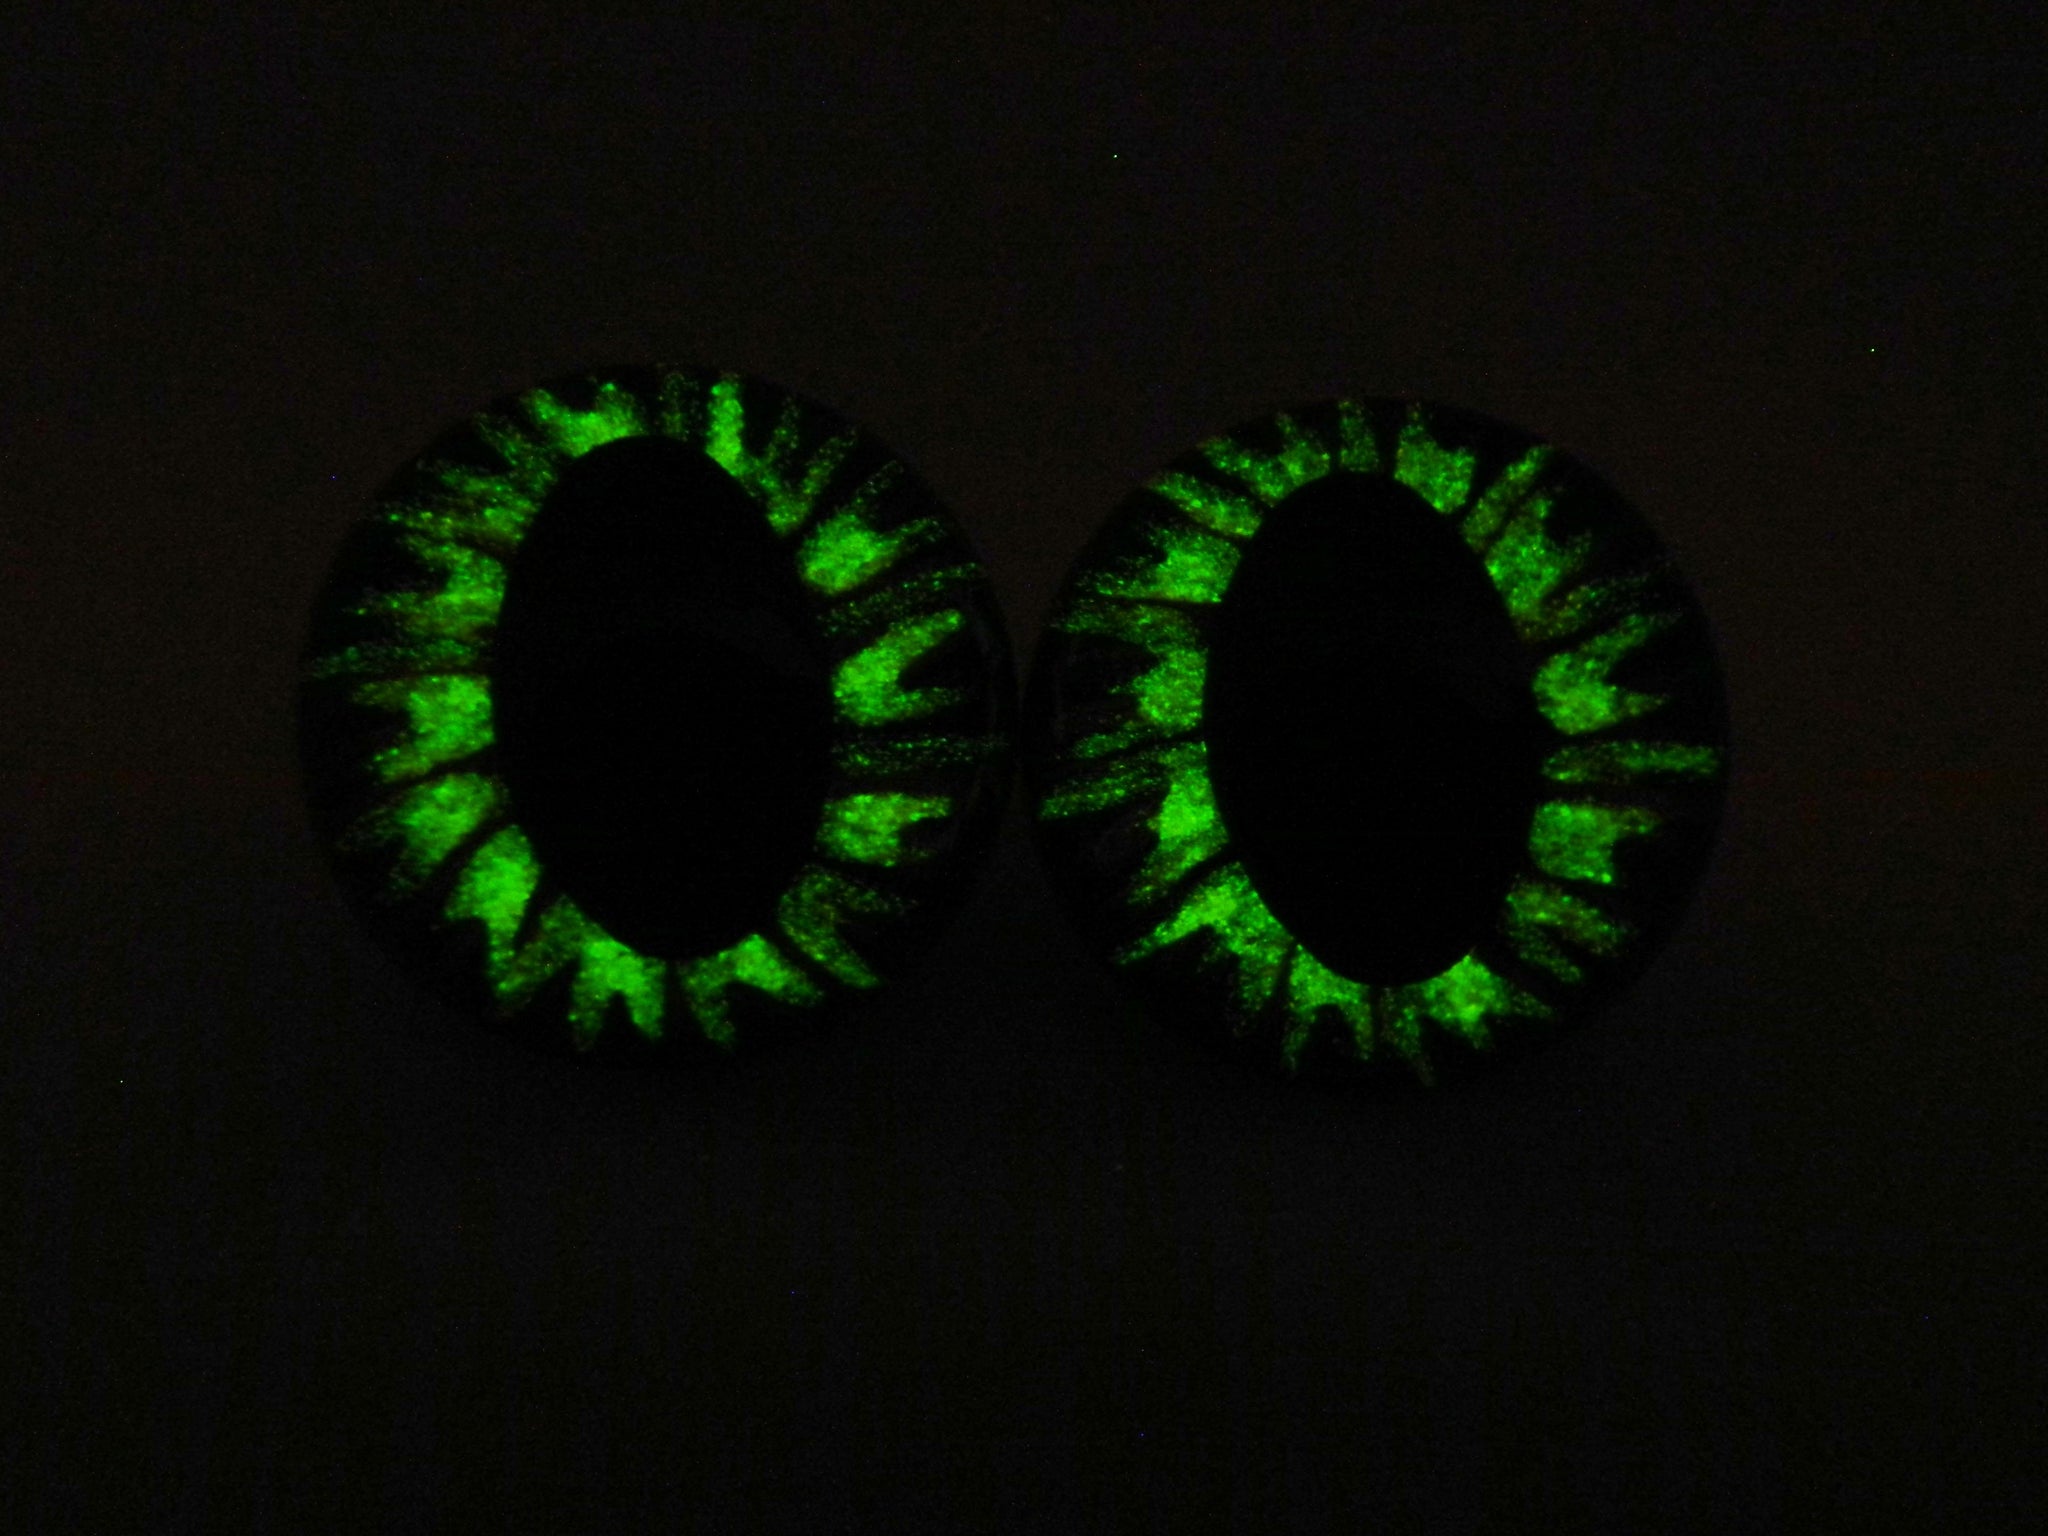 Reptile Glow Eyes Combo Pack – Suncatcher Craft Eyes